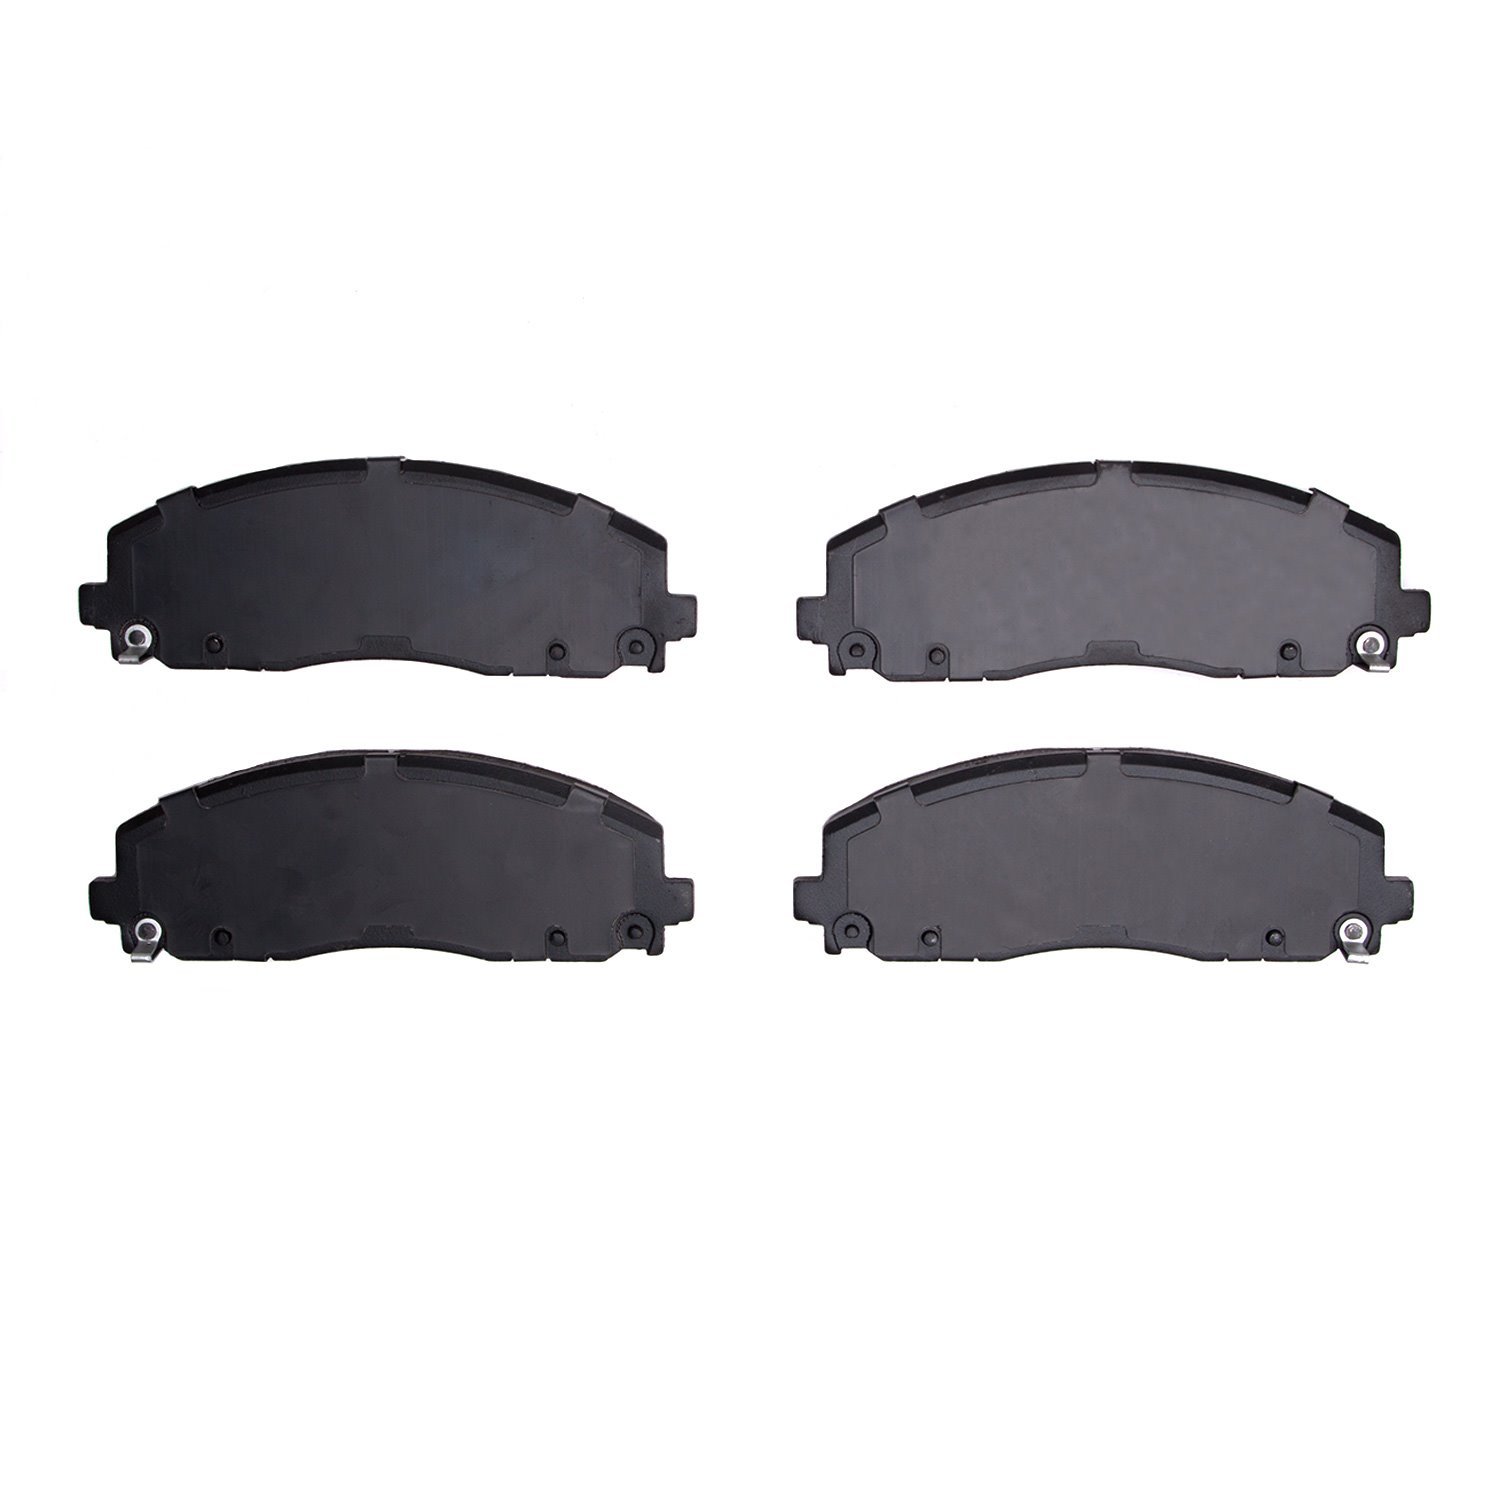 1400-1589-00 Ultimate-Duty Brake Pads Kit, Fits Select Multiple Makes/Models, Position: Front